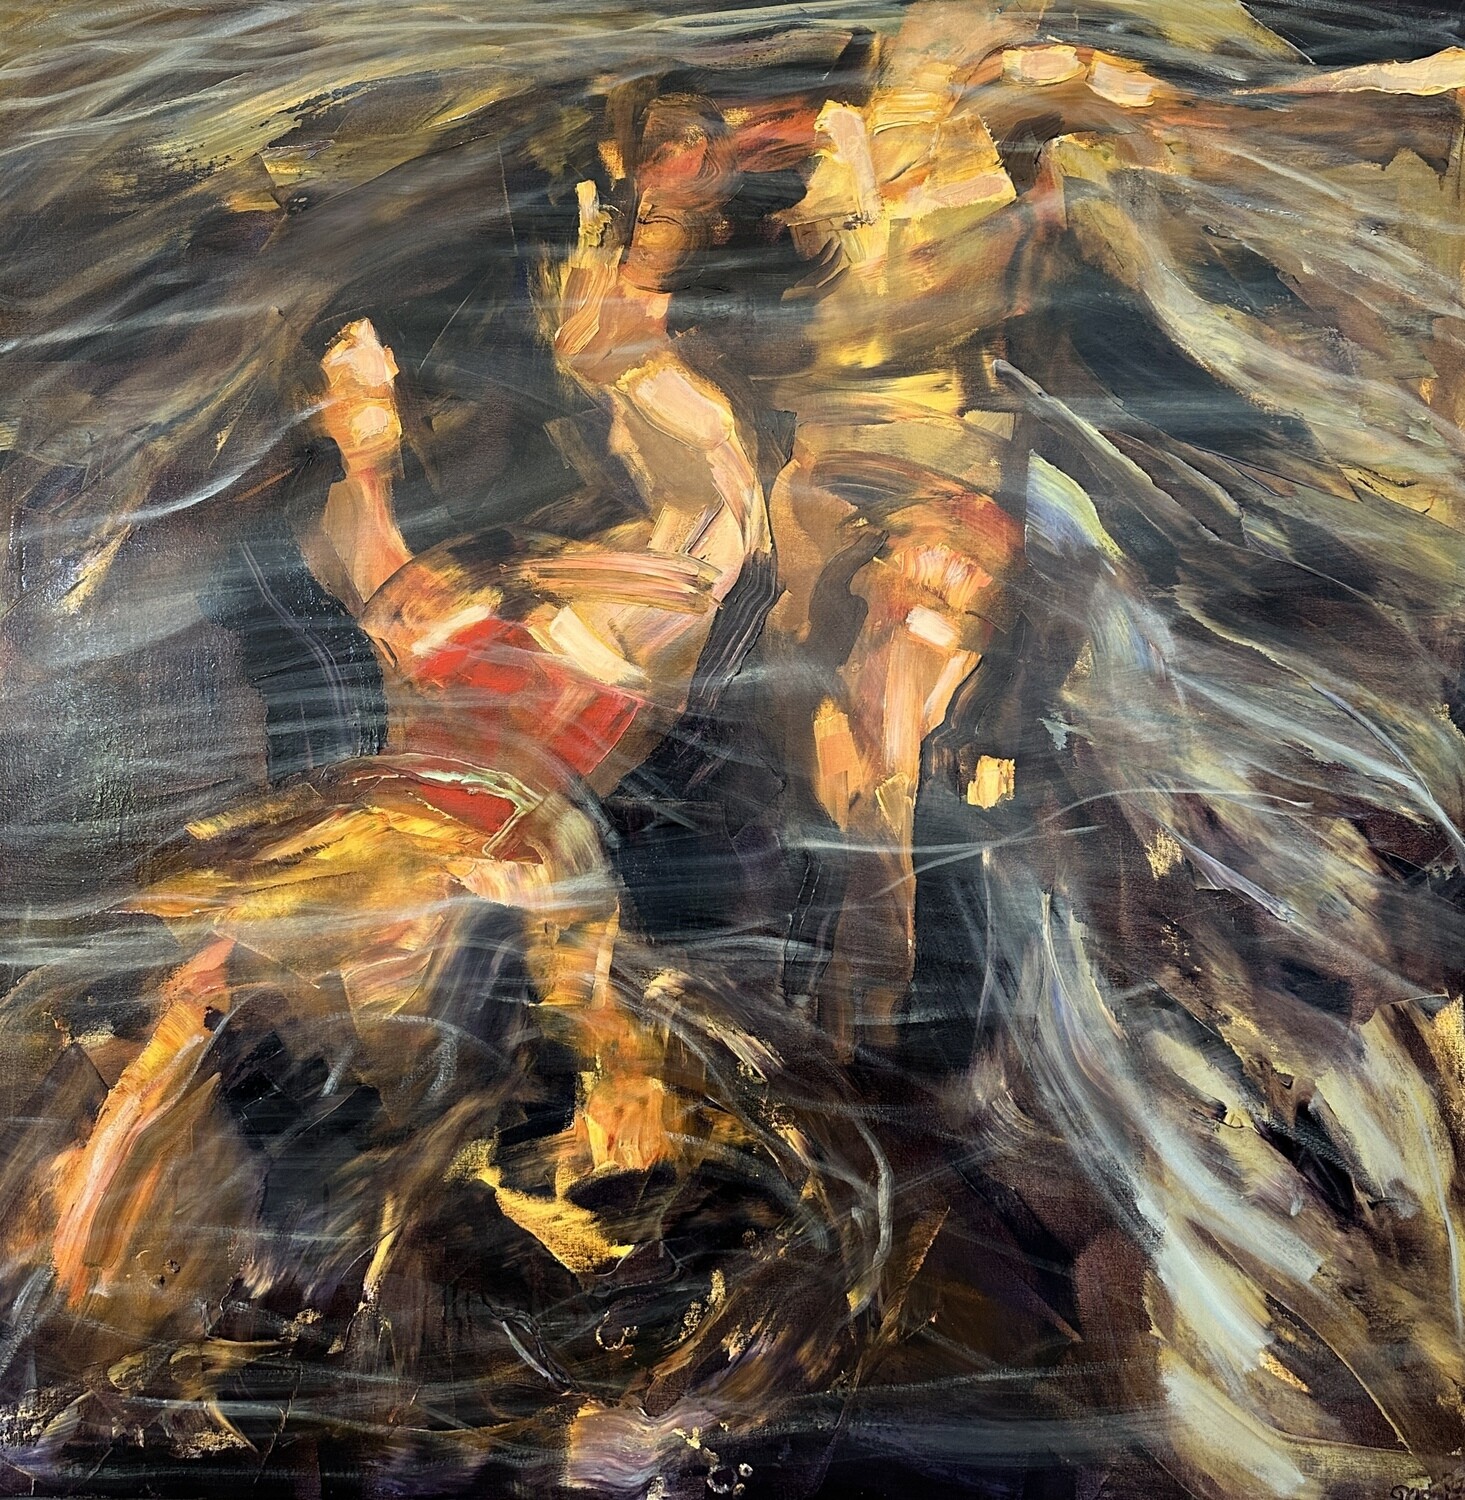 Gorek - Lake Dance - 45x45 inch oil on canvas mounted on wood panel